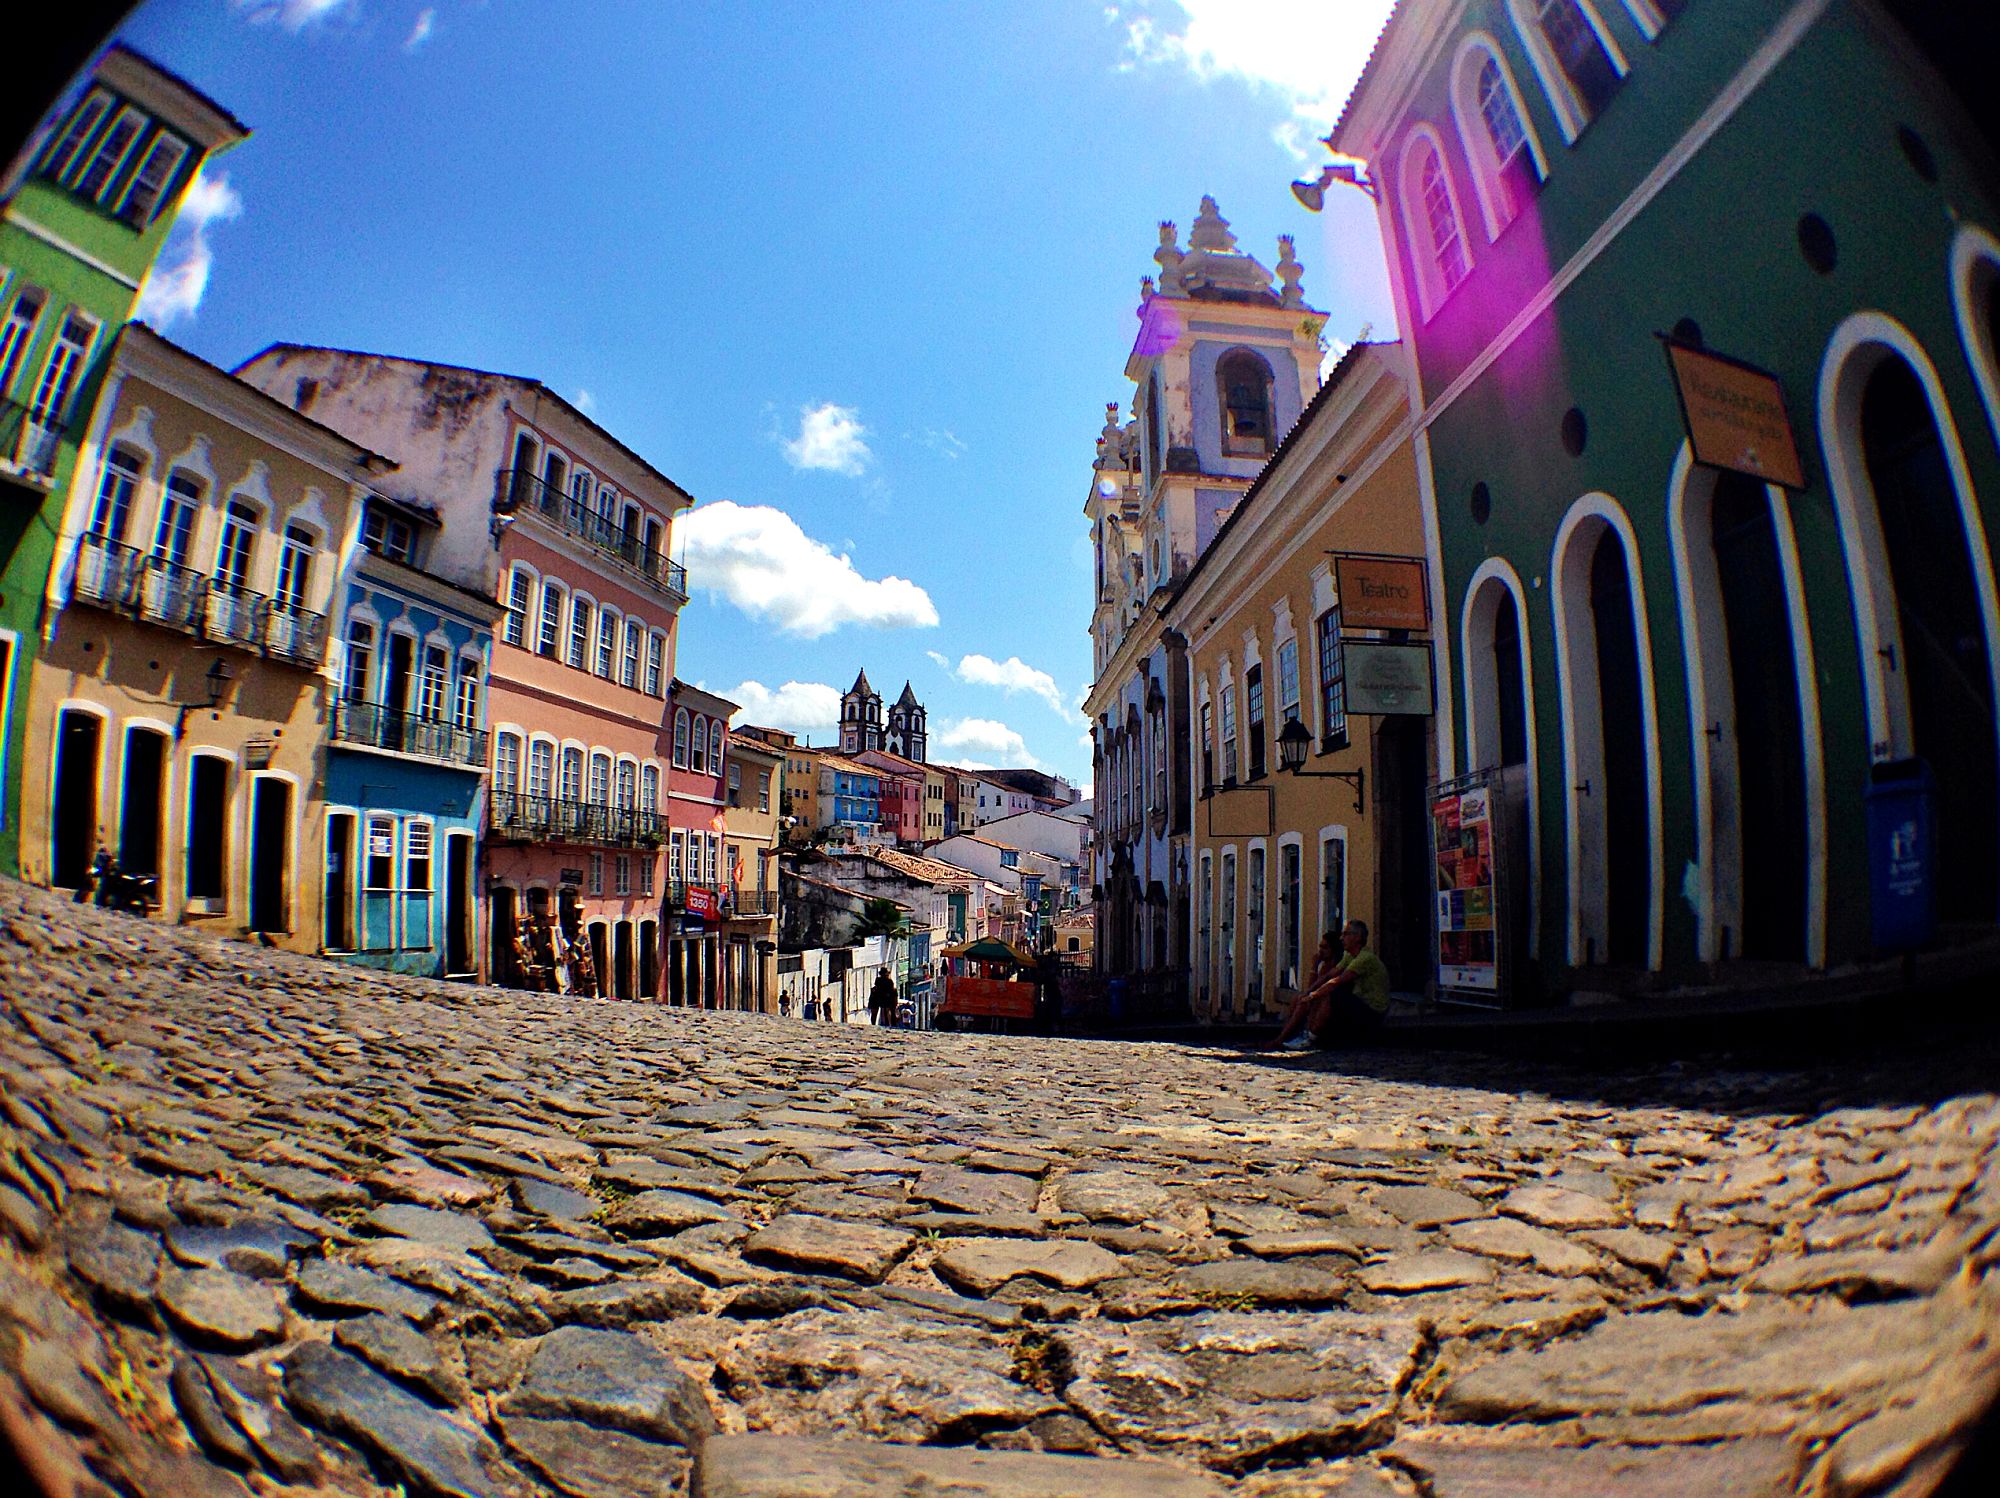 Salvador, Bahia - Wikipedia